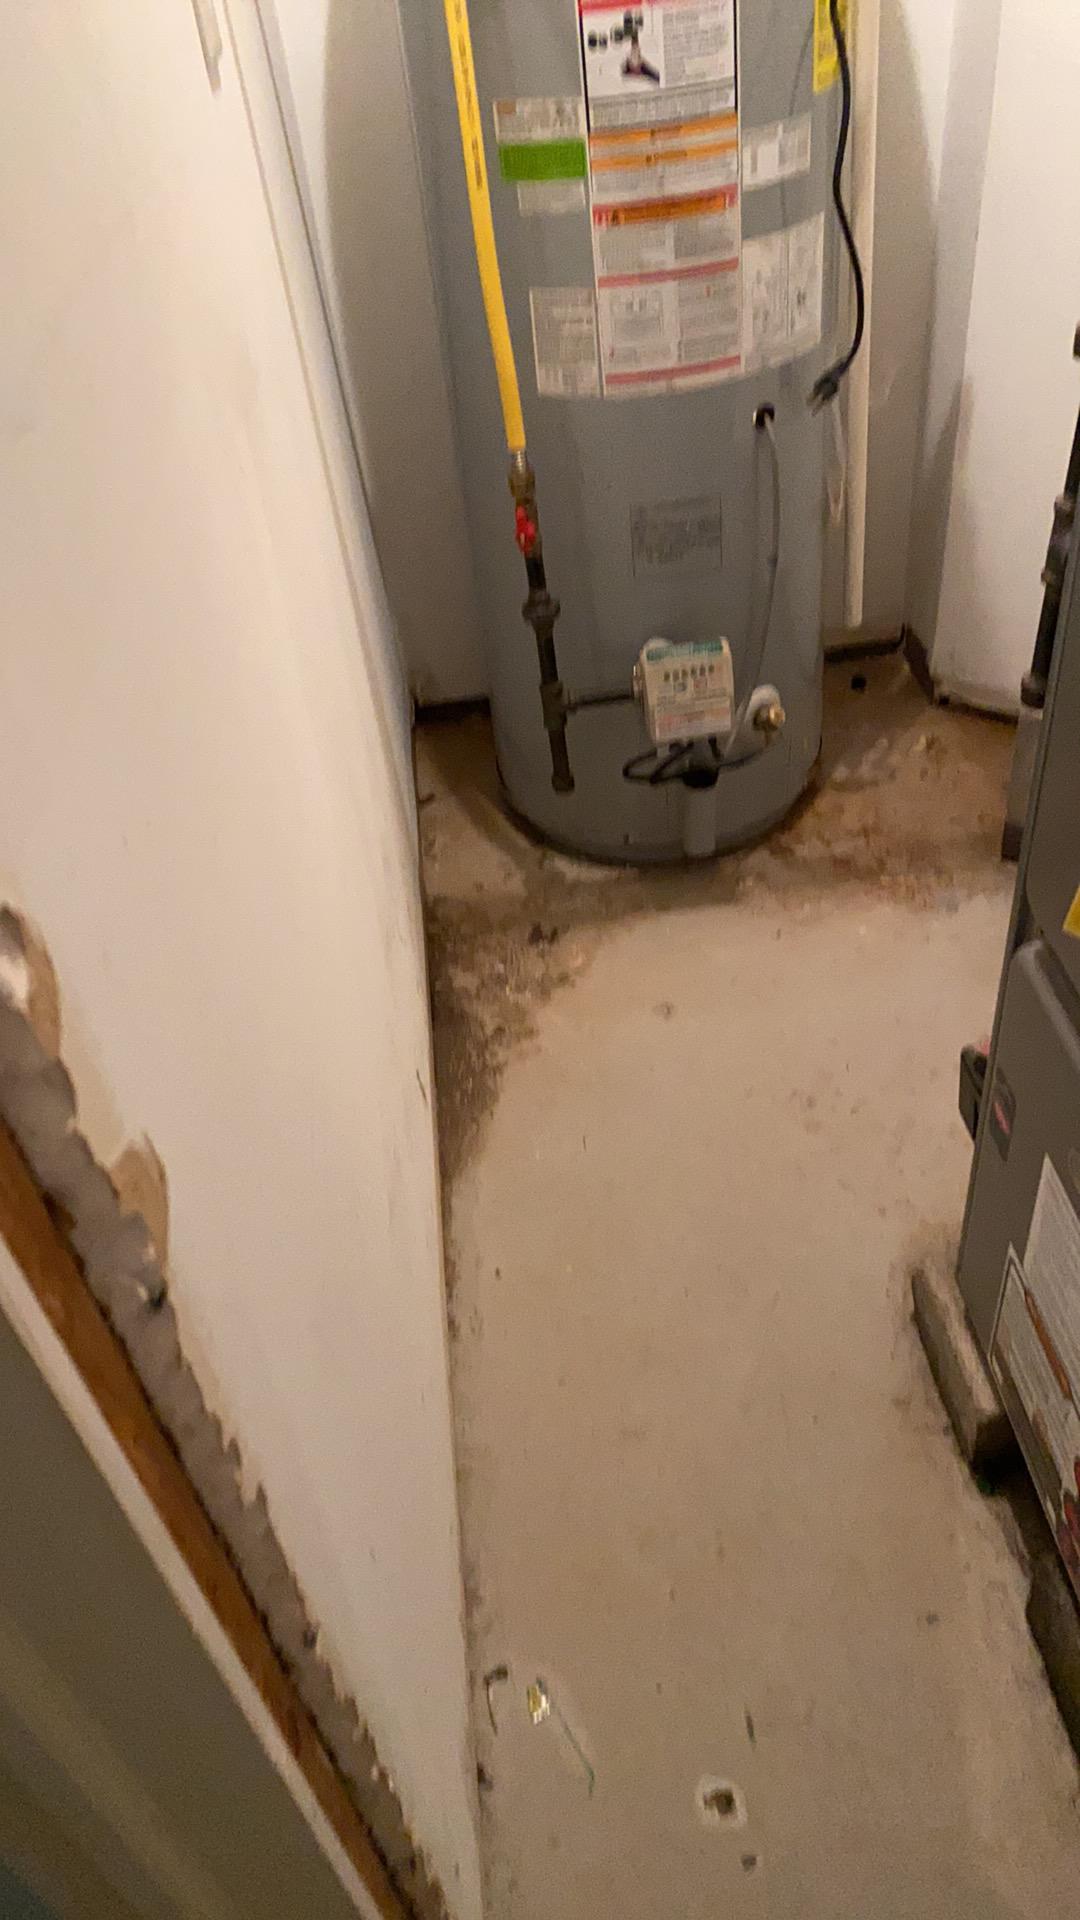 Leaking hot water heater